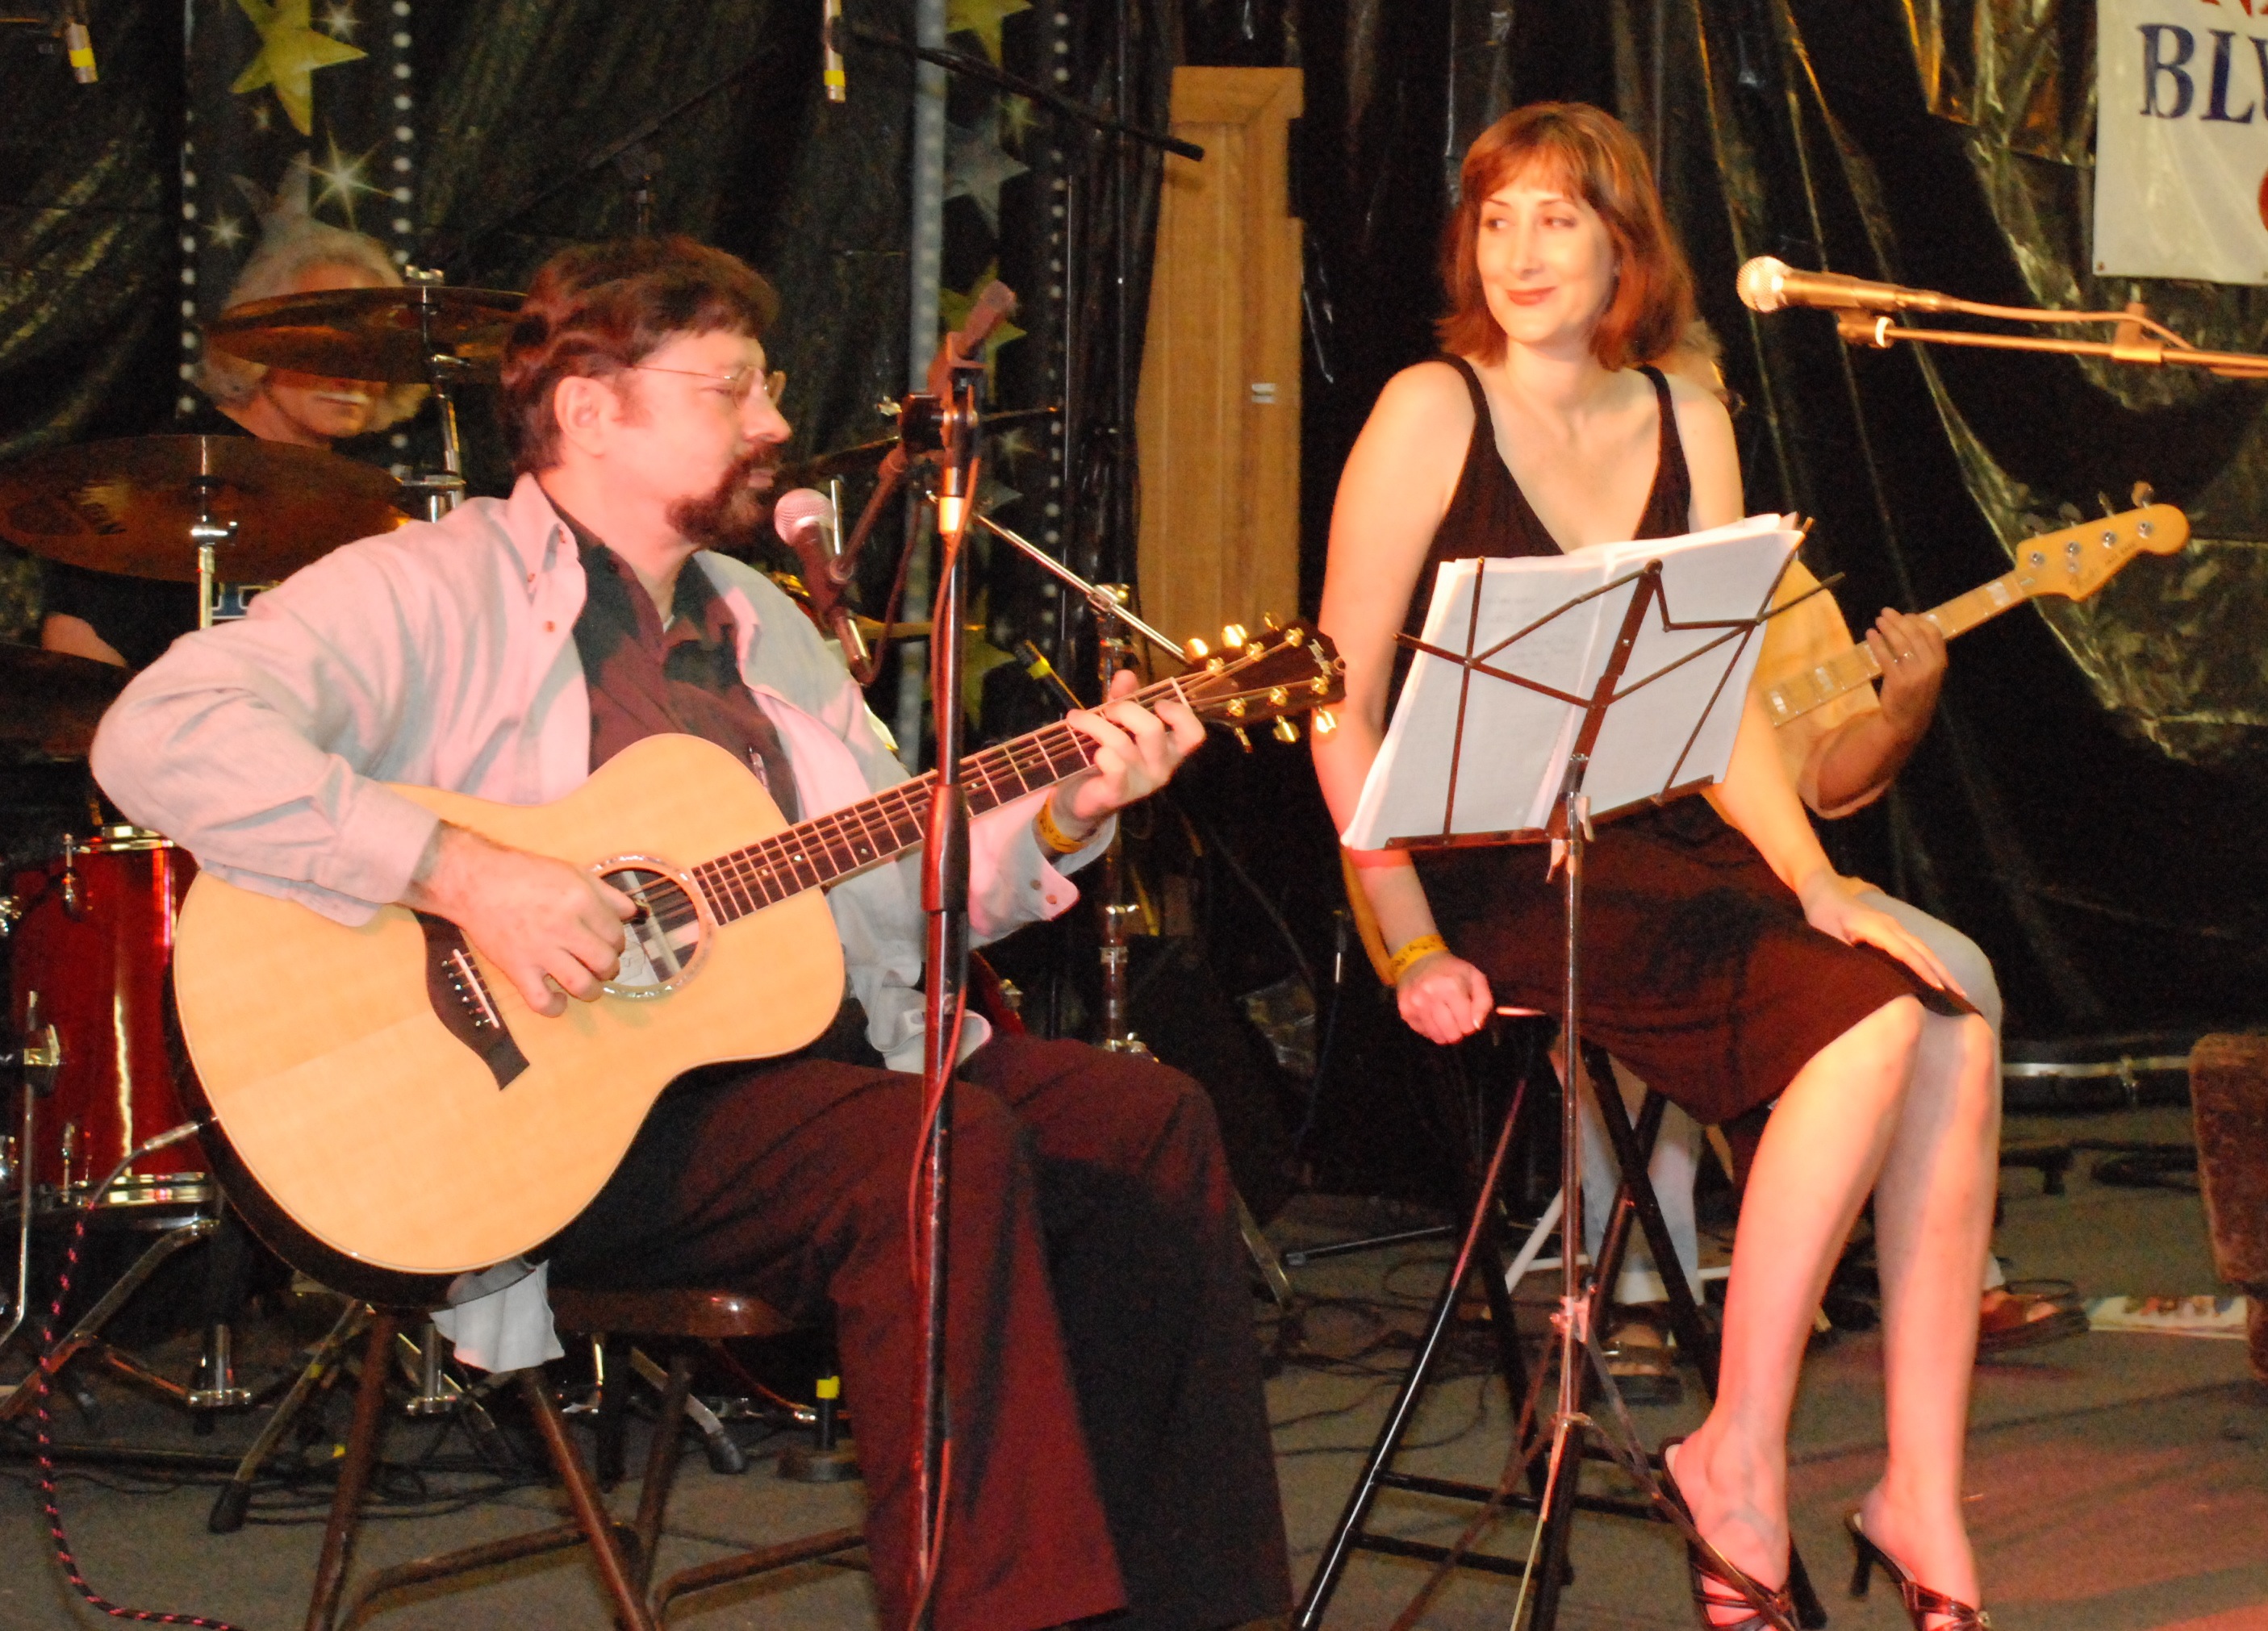 Michael and Melissa Birnbaum performing at Navasota Bluesfest in 2008